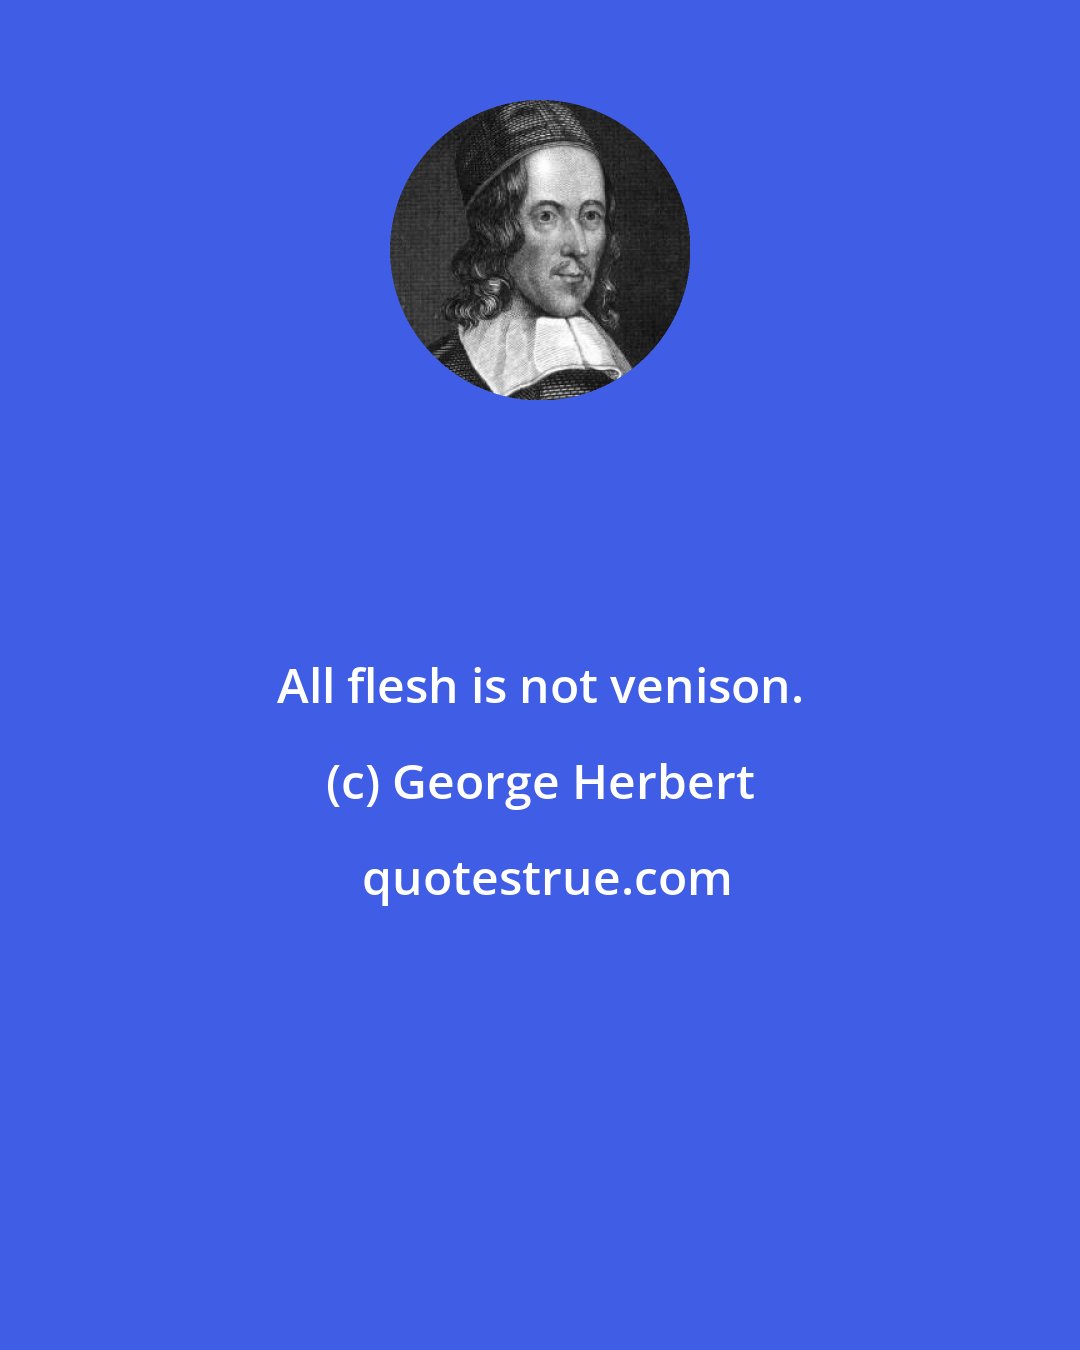 George Herbert: All flesh is not venison.